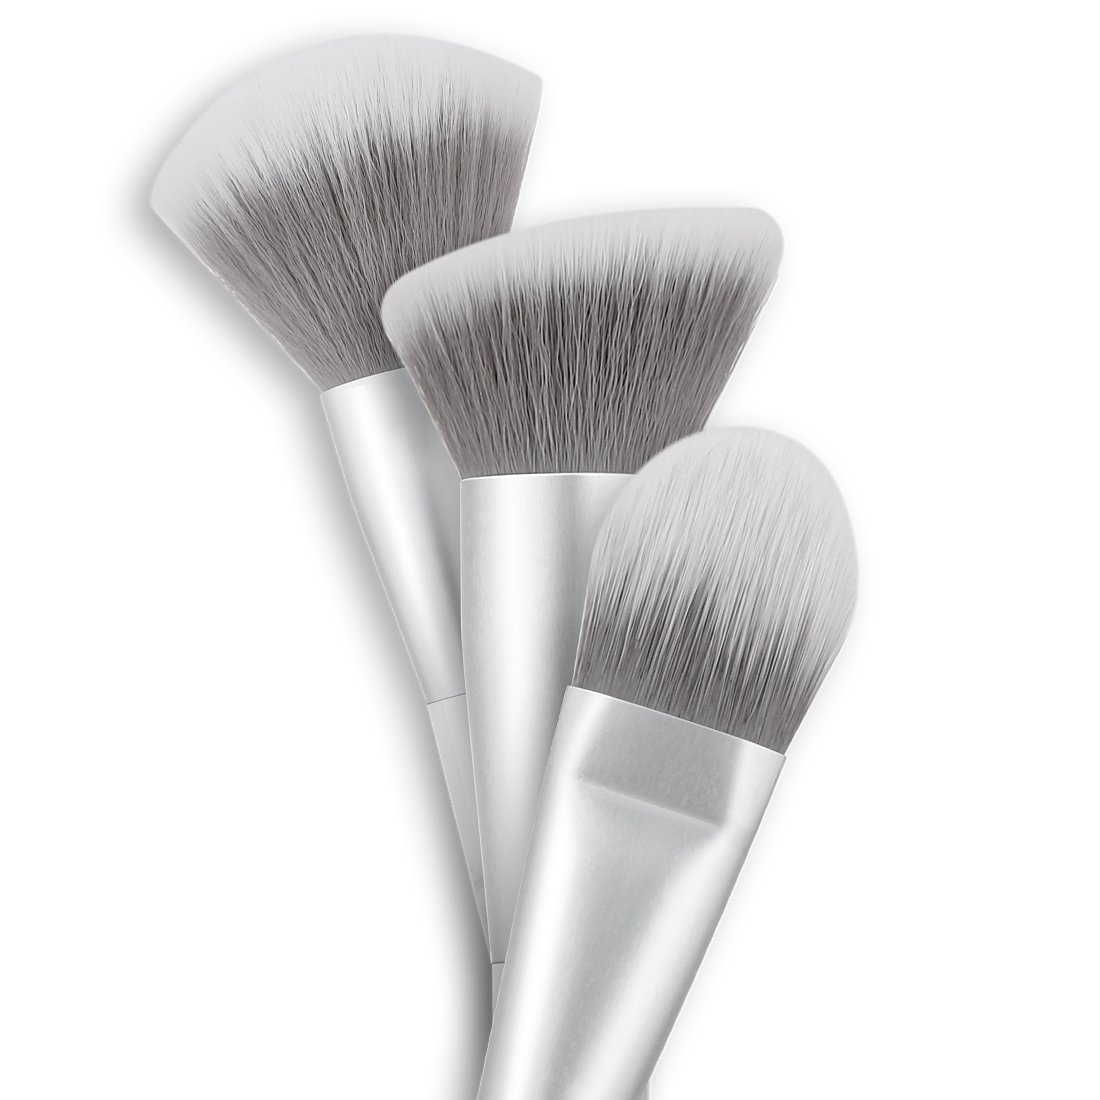 UNIMEIX Marble Makeup Brushes 15 Pieces Makeup Brush Set Premium Face Eyeliner Blush Contour Foundation Cosmetic Brushes for Powder Liquid Cream